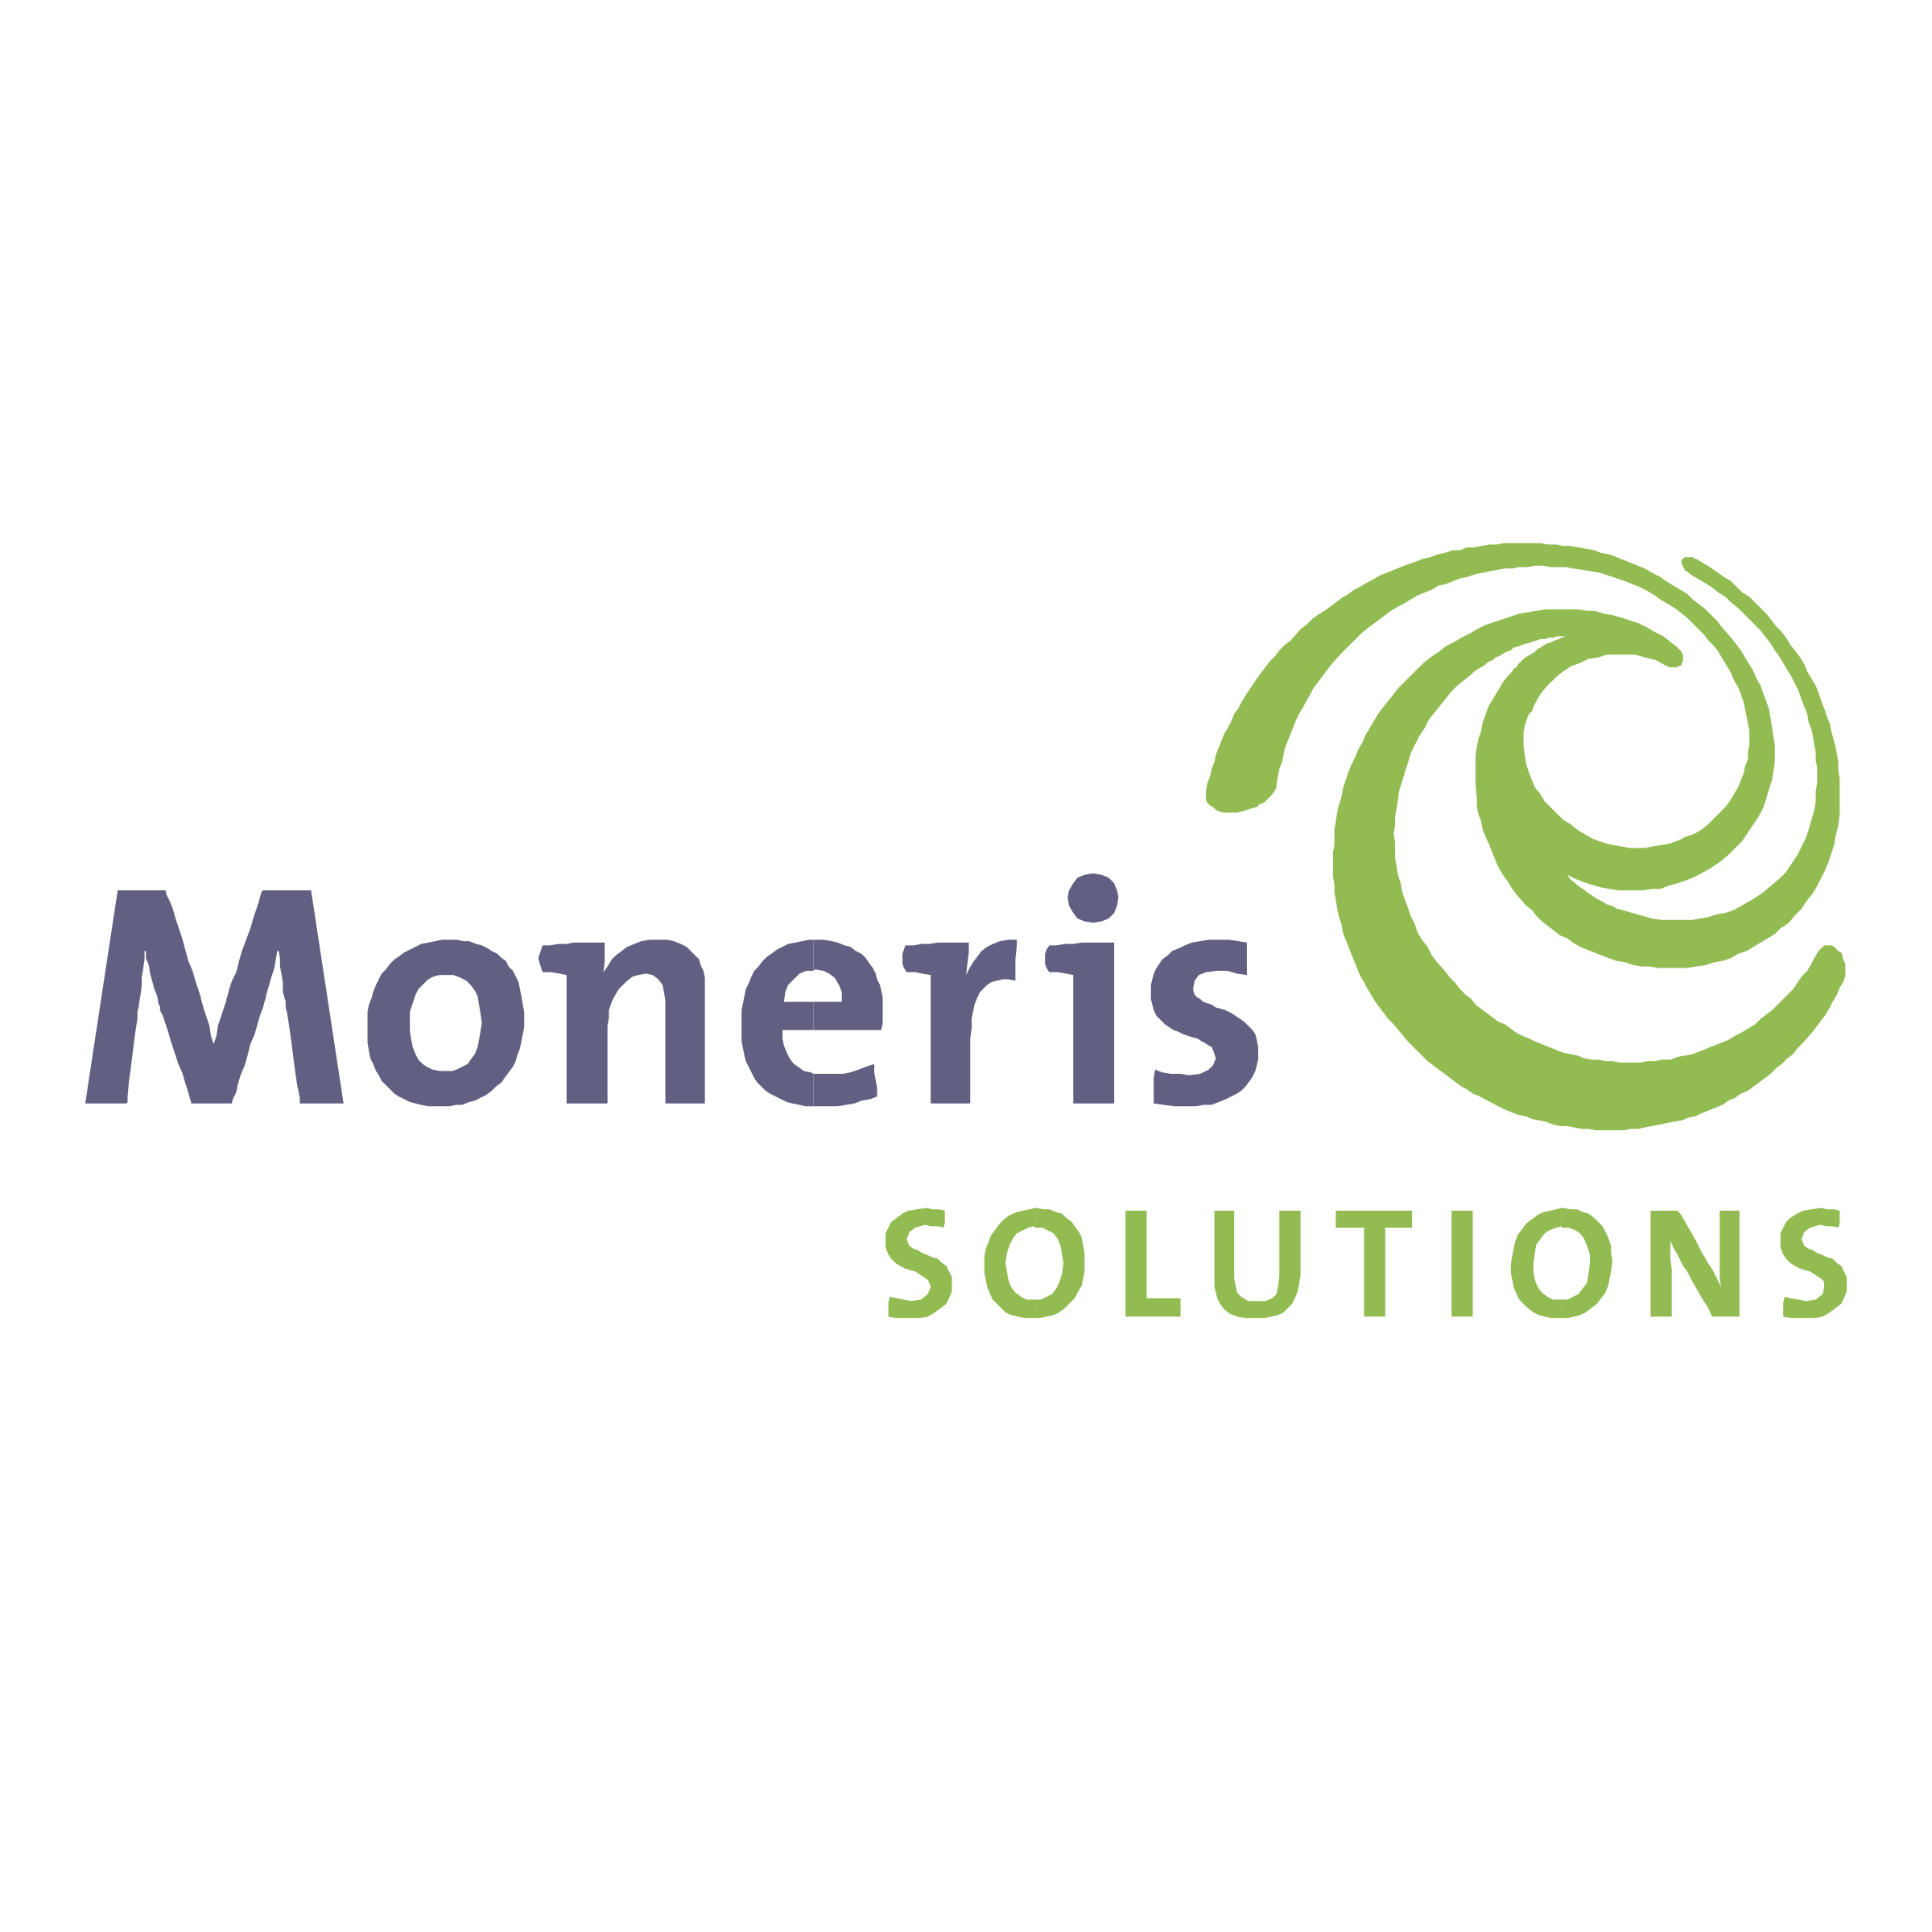 Moneris Logo - Moneris Solutions Logo PNG Transparent & SVG Vector - Freebie Supply